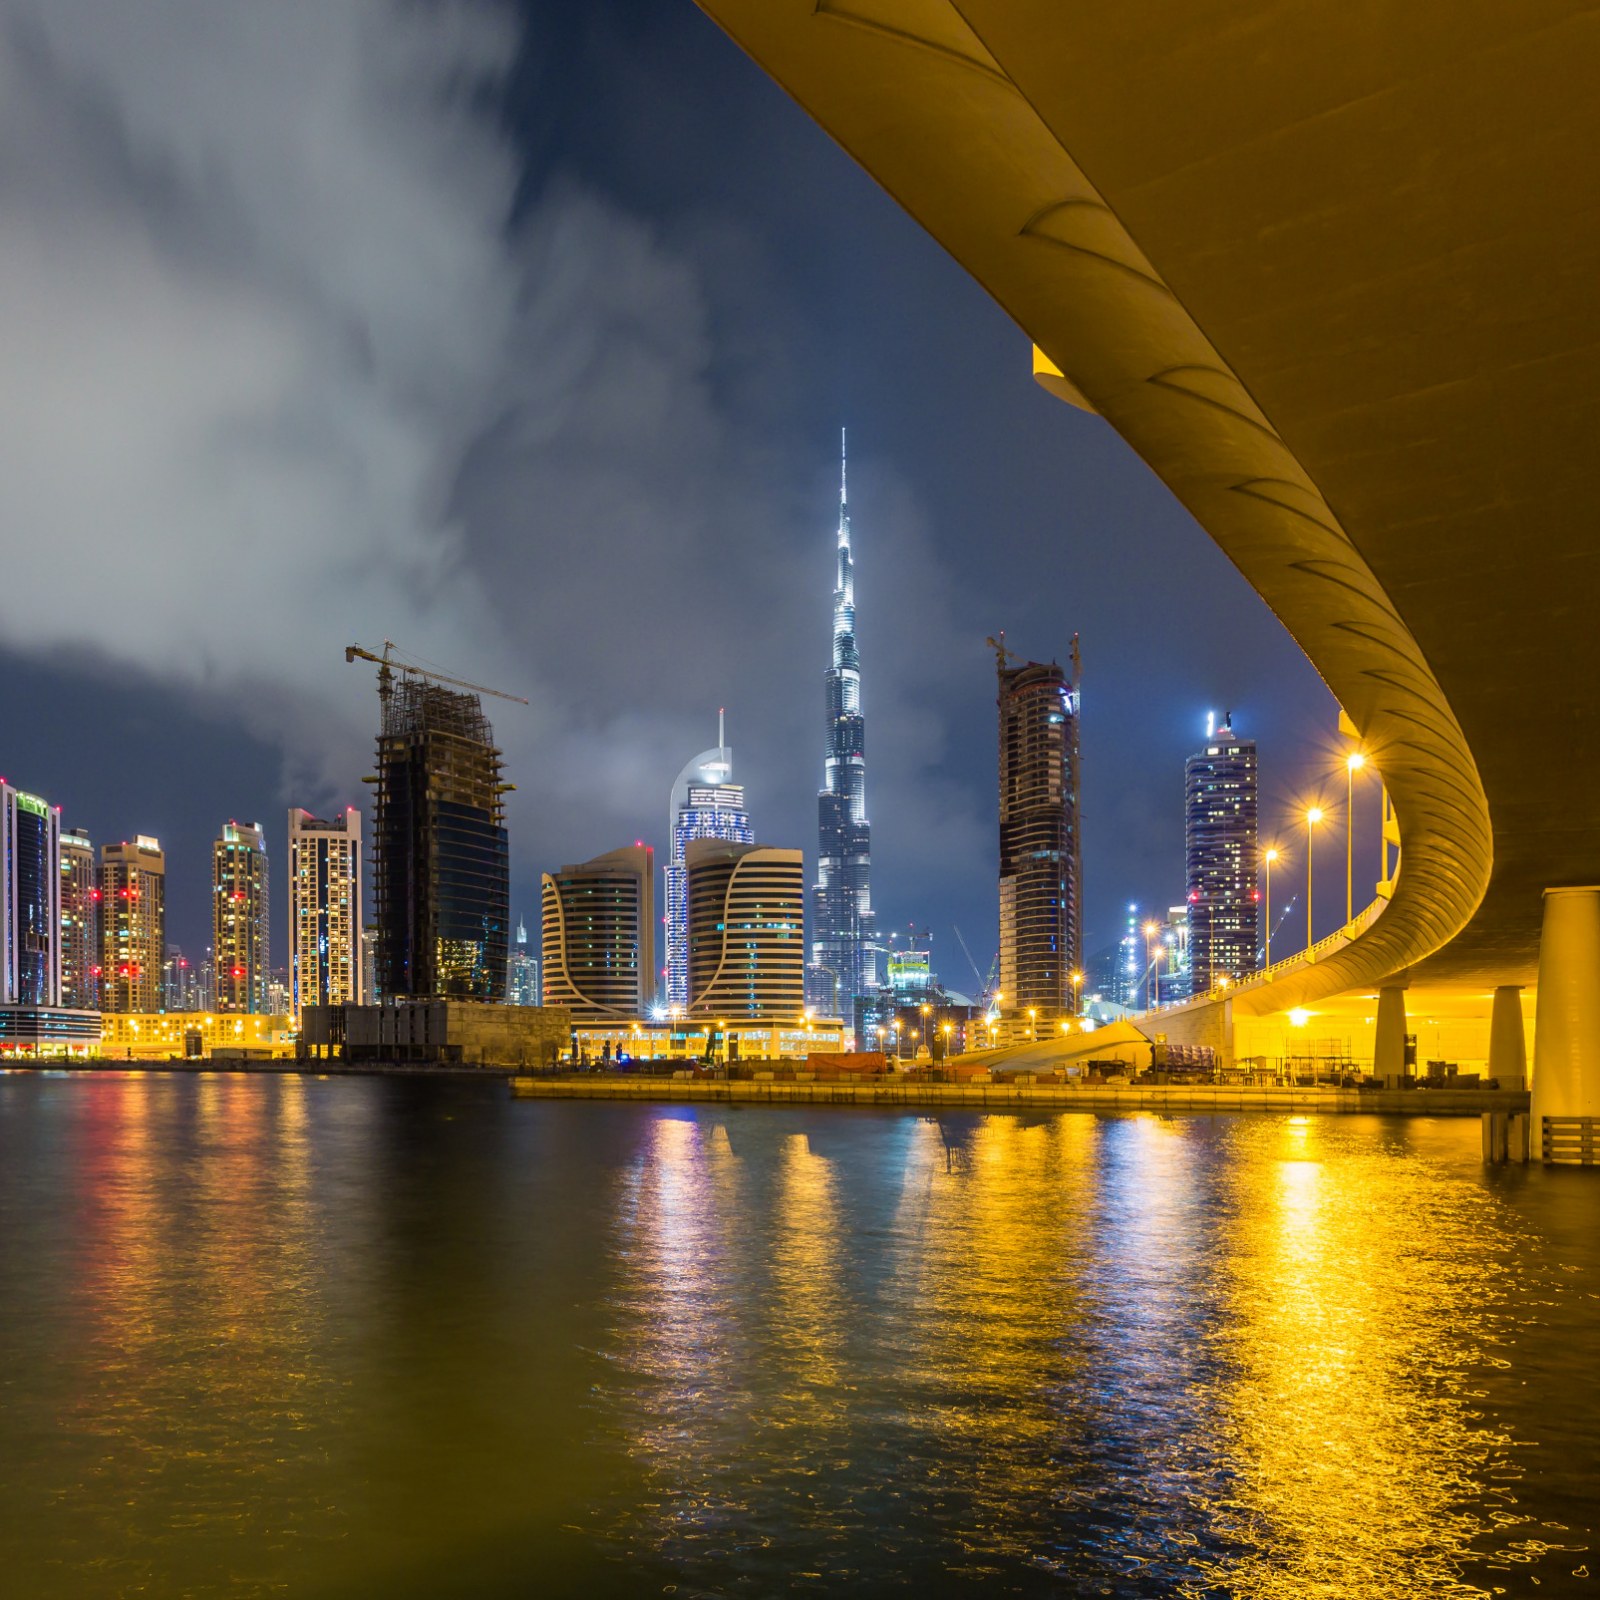 Dubai creates artificial rainfall to beat scorching temps